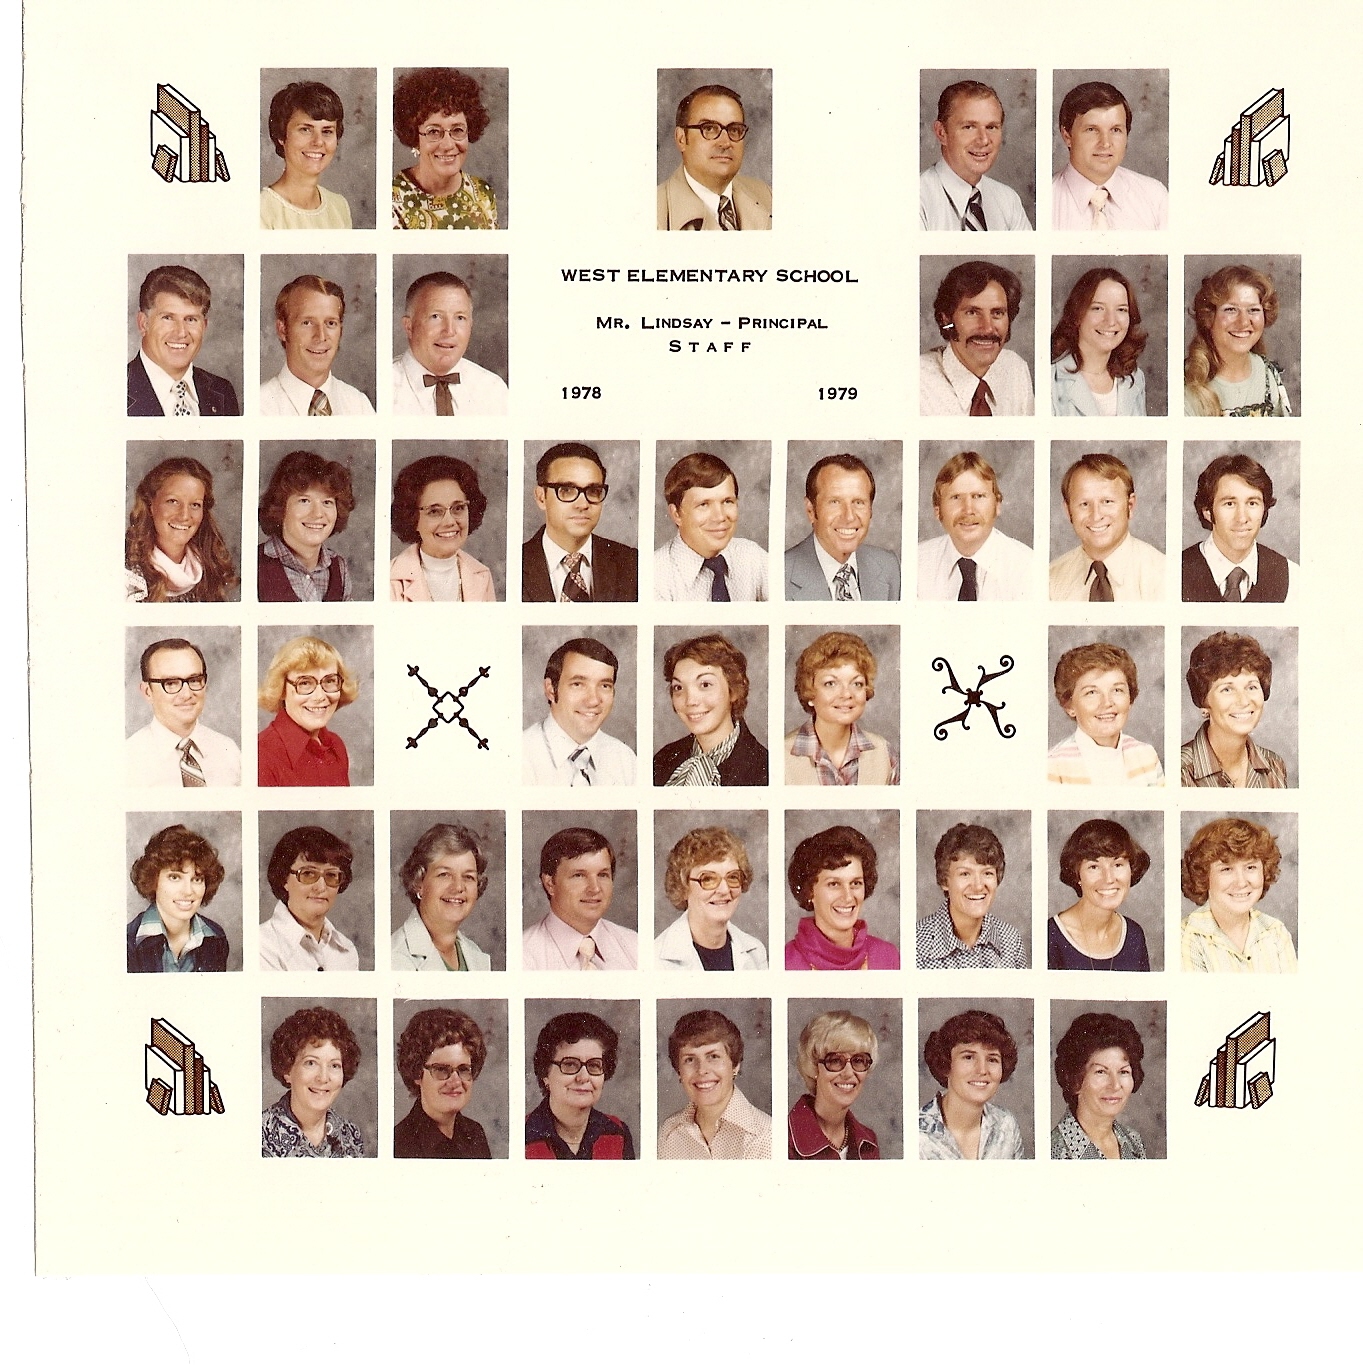 WCHS-00239 West Elementary School 1978-1979 Faculty